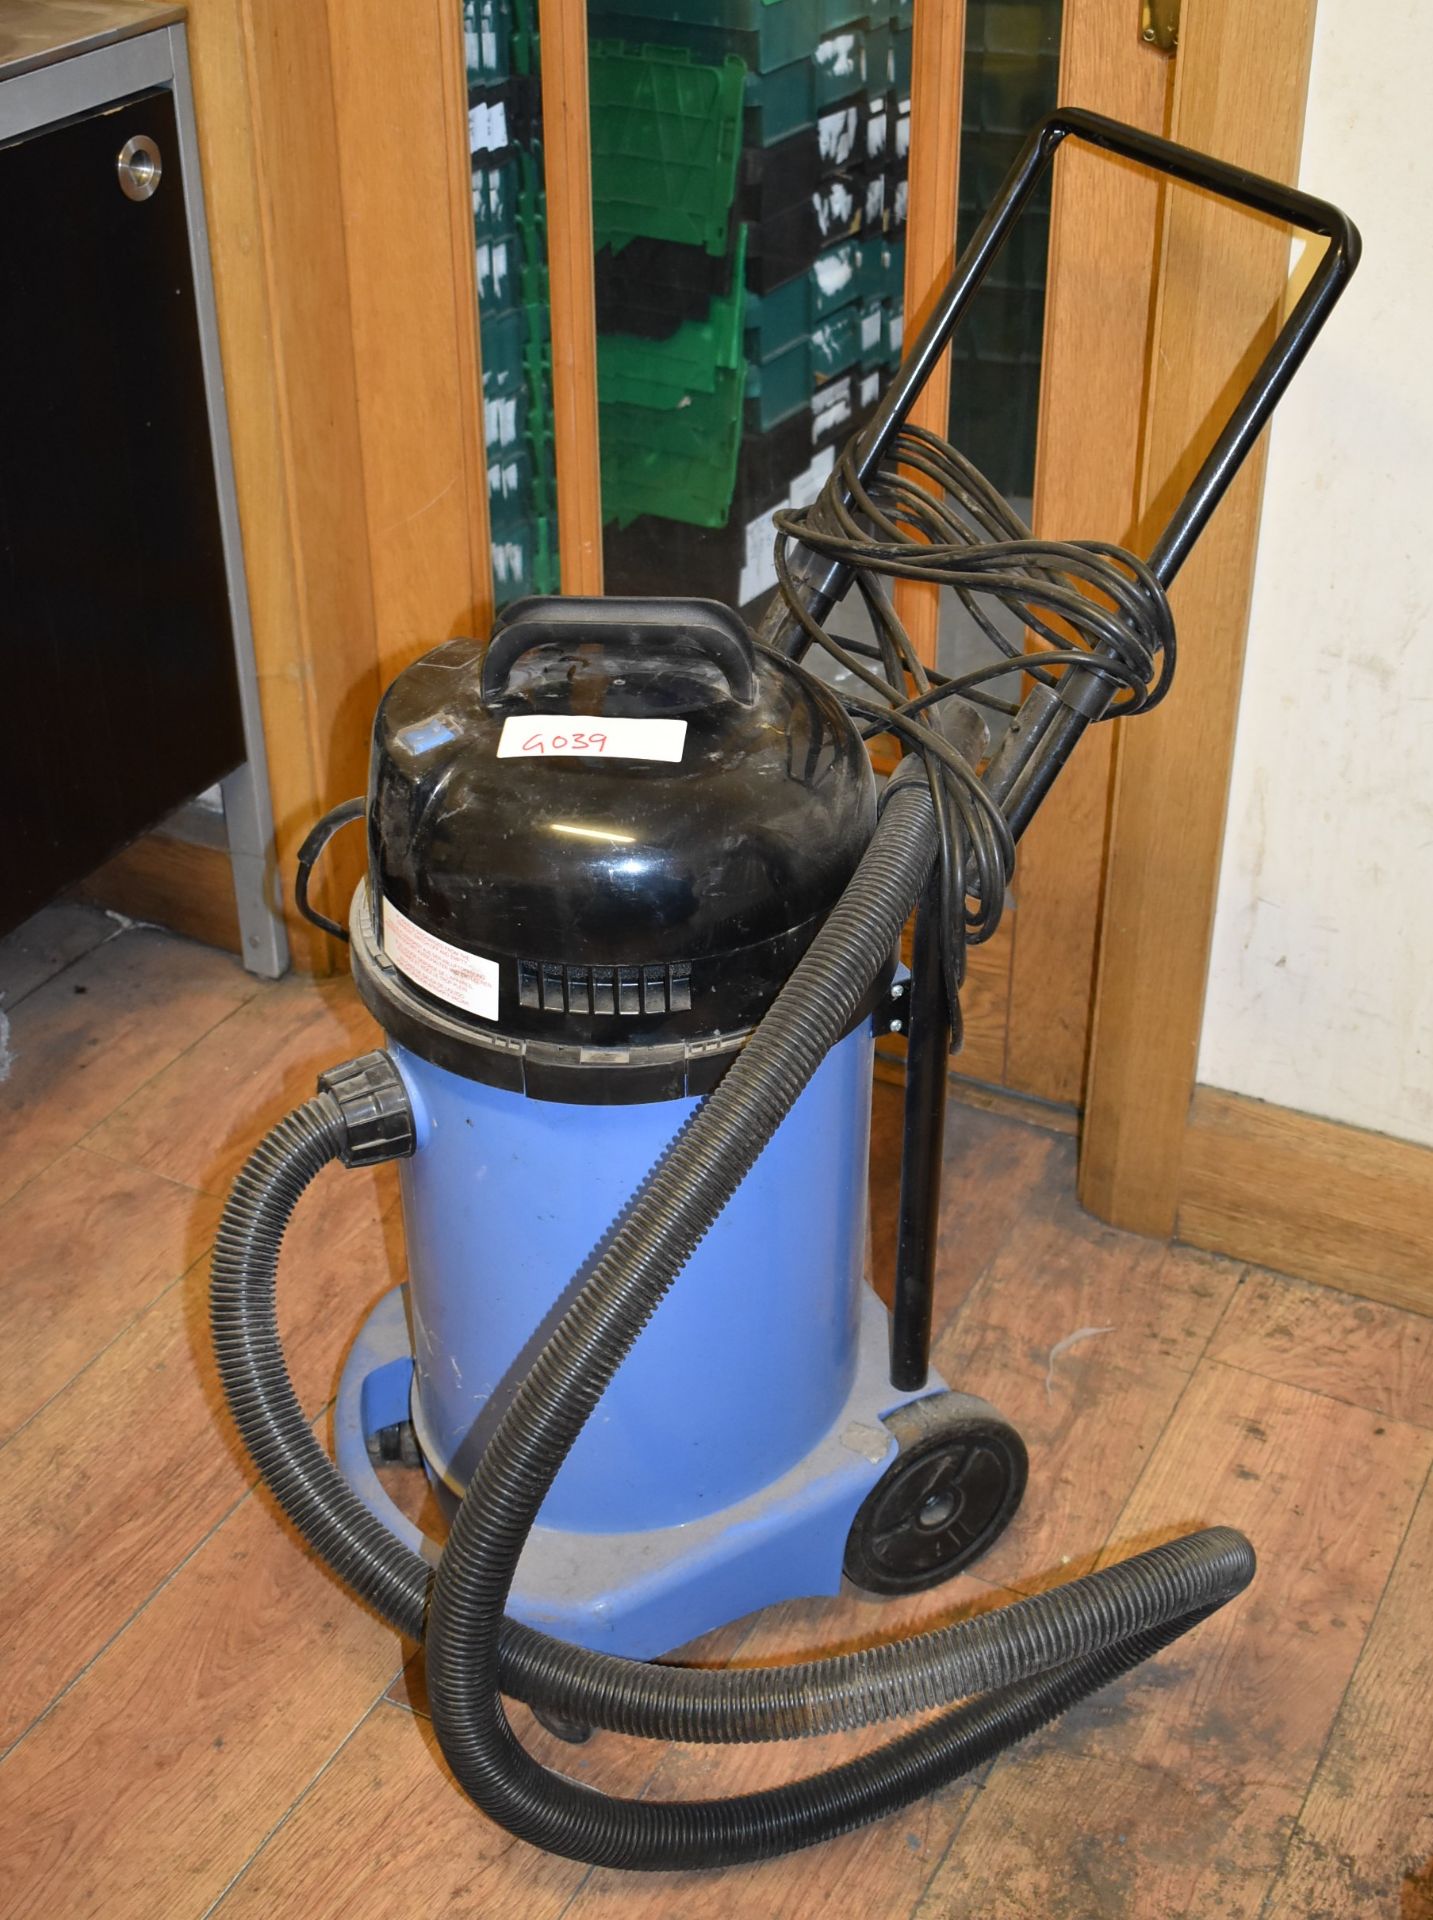 1 x Numatic WV470 Commercial Vacuum Cleaner - 115v - CL011 - Ref: G039 GIT - Location: Altrincham